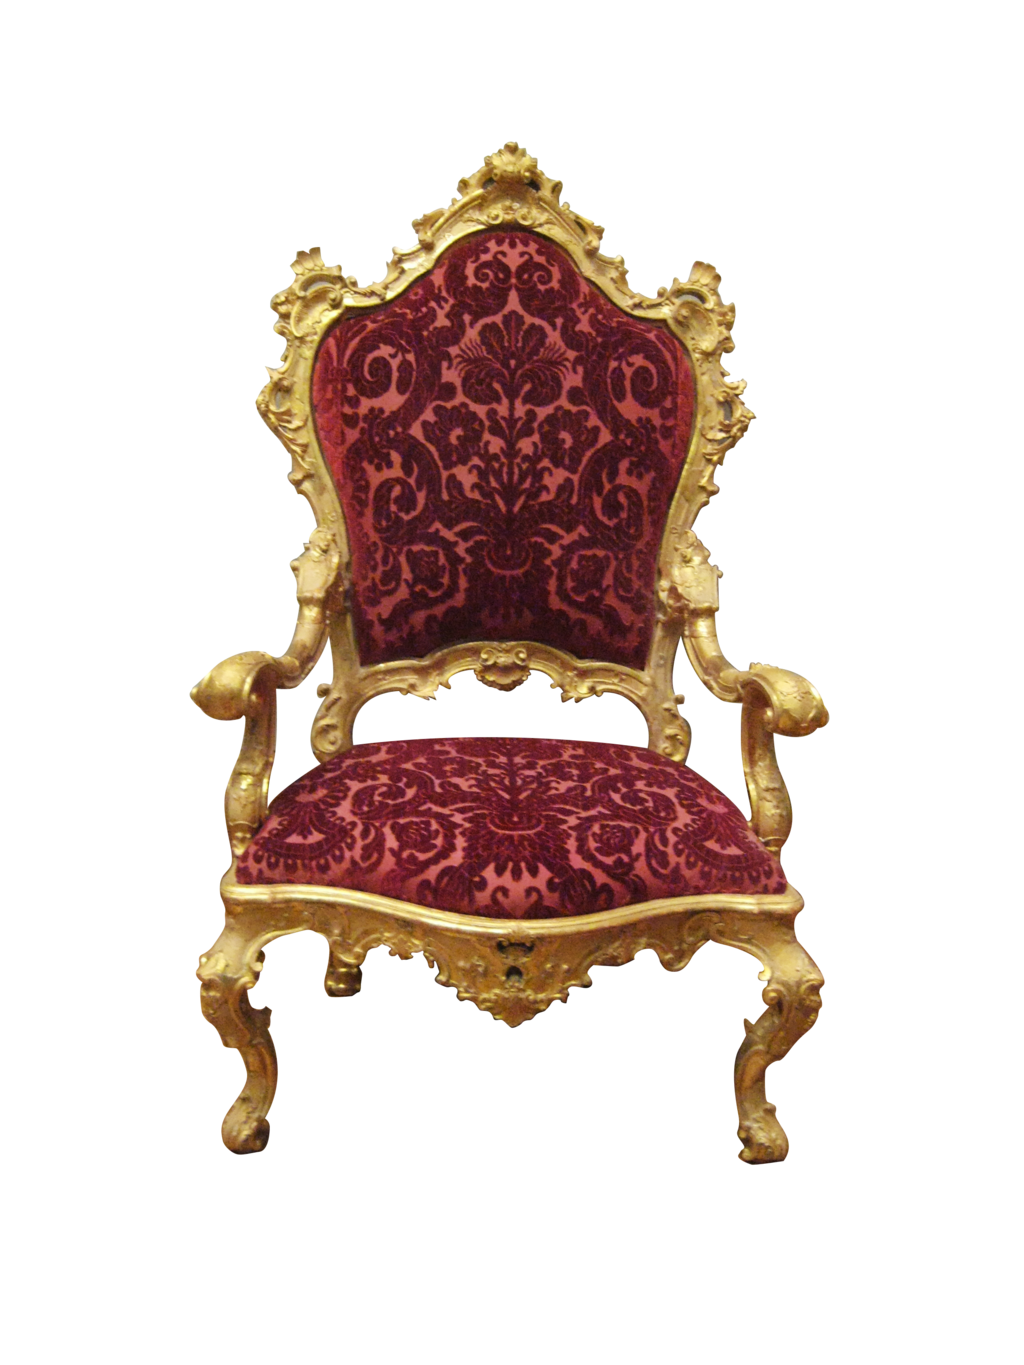 queen clipart throne